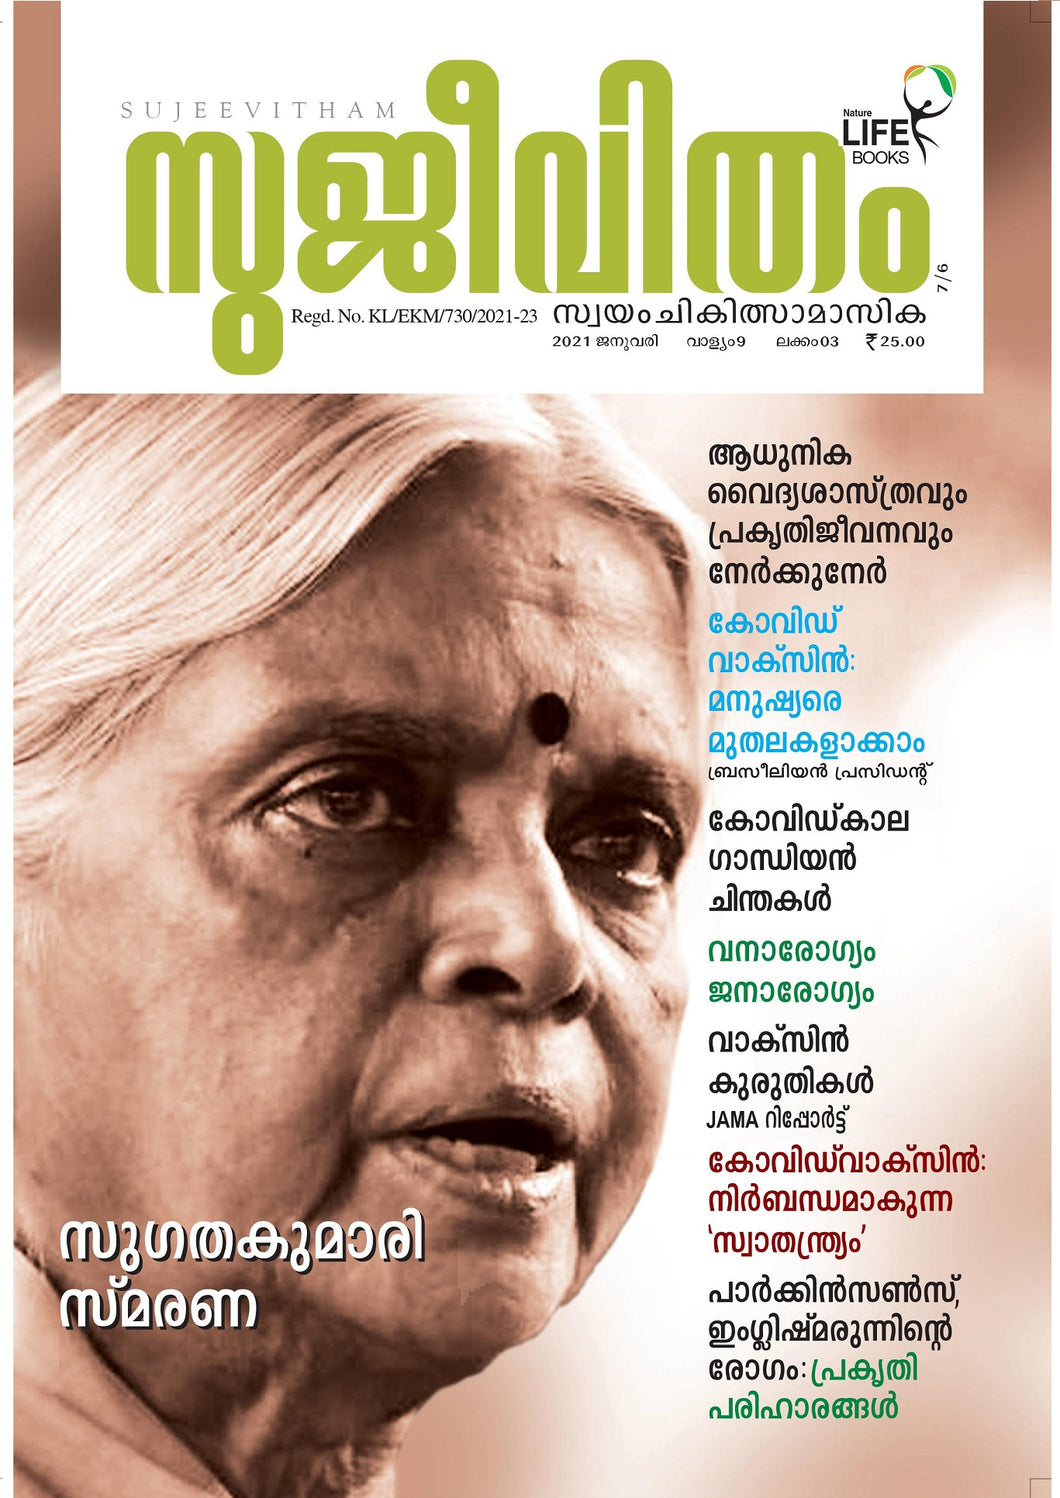 Sujeevitham Magazine January 2021 ( Digital Edition)